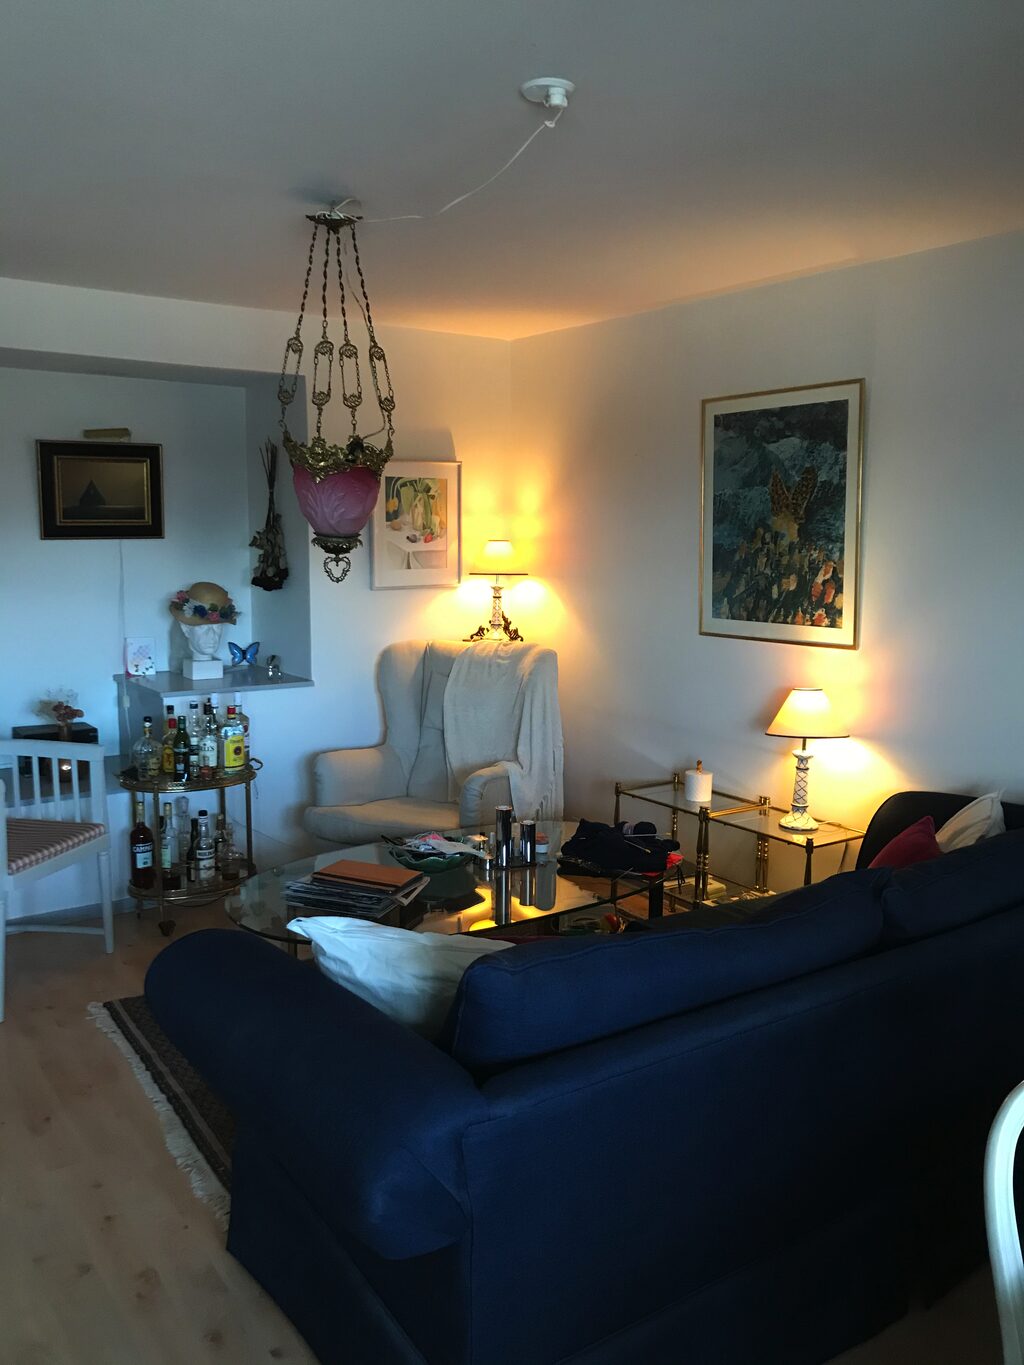 Lägenhetsbyte - Norrtullsgatan 65, 113 45 Stockholm